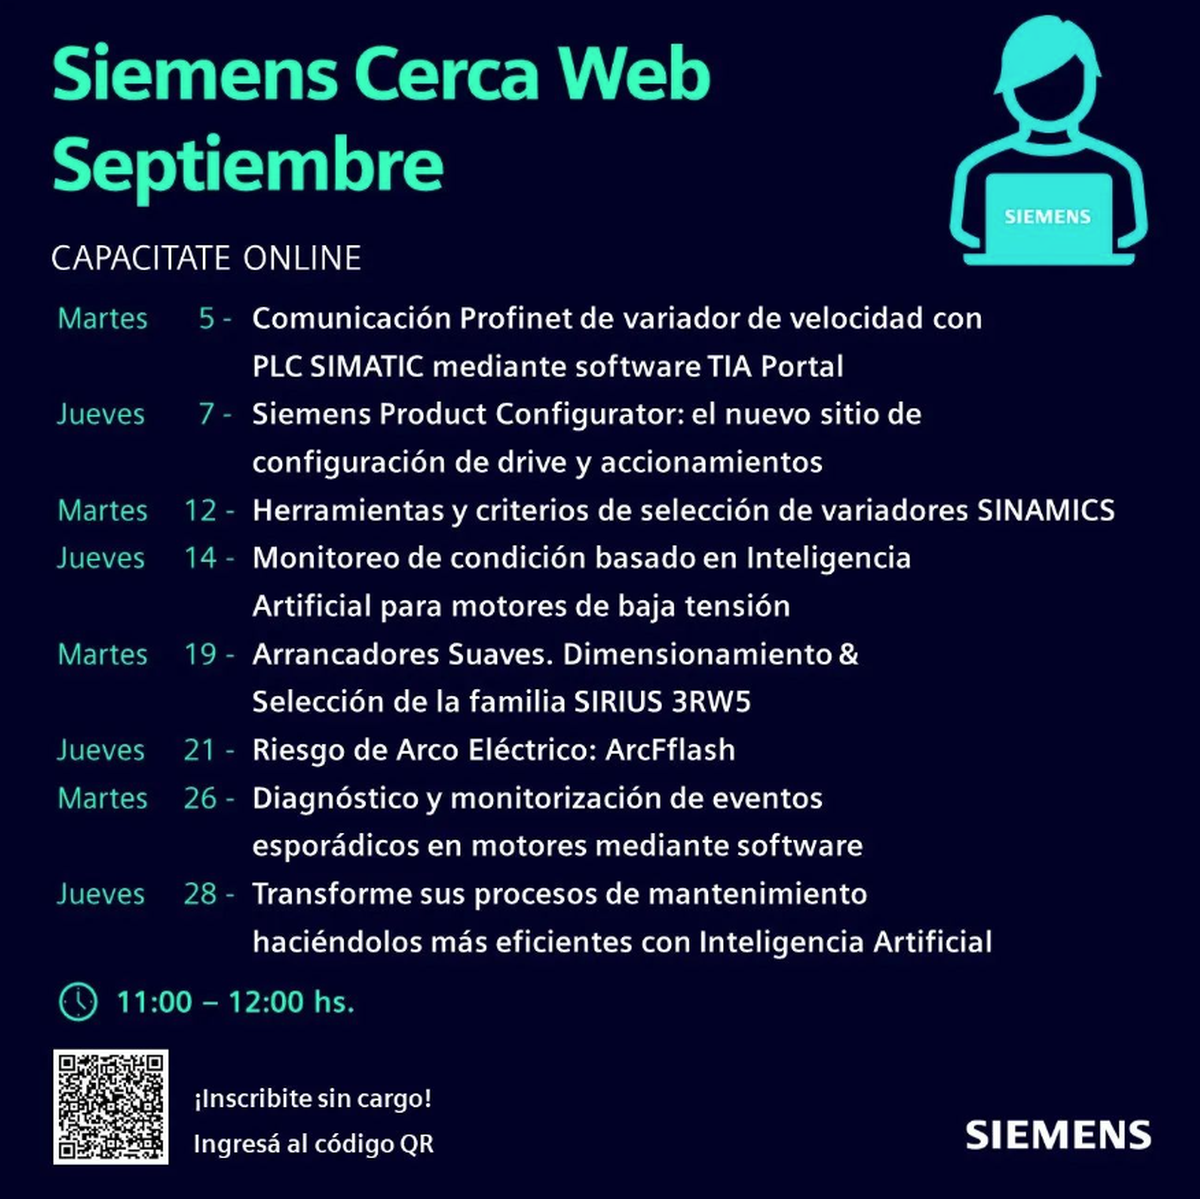 SiemensCercaWeb - Agenda de septiembre